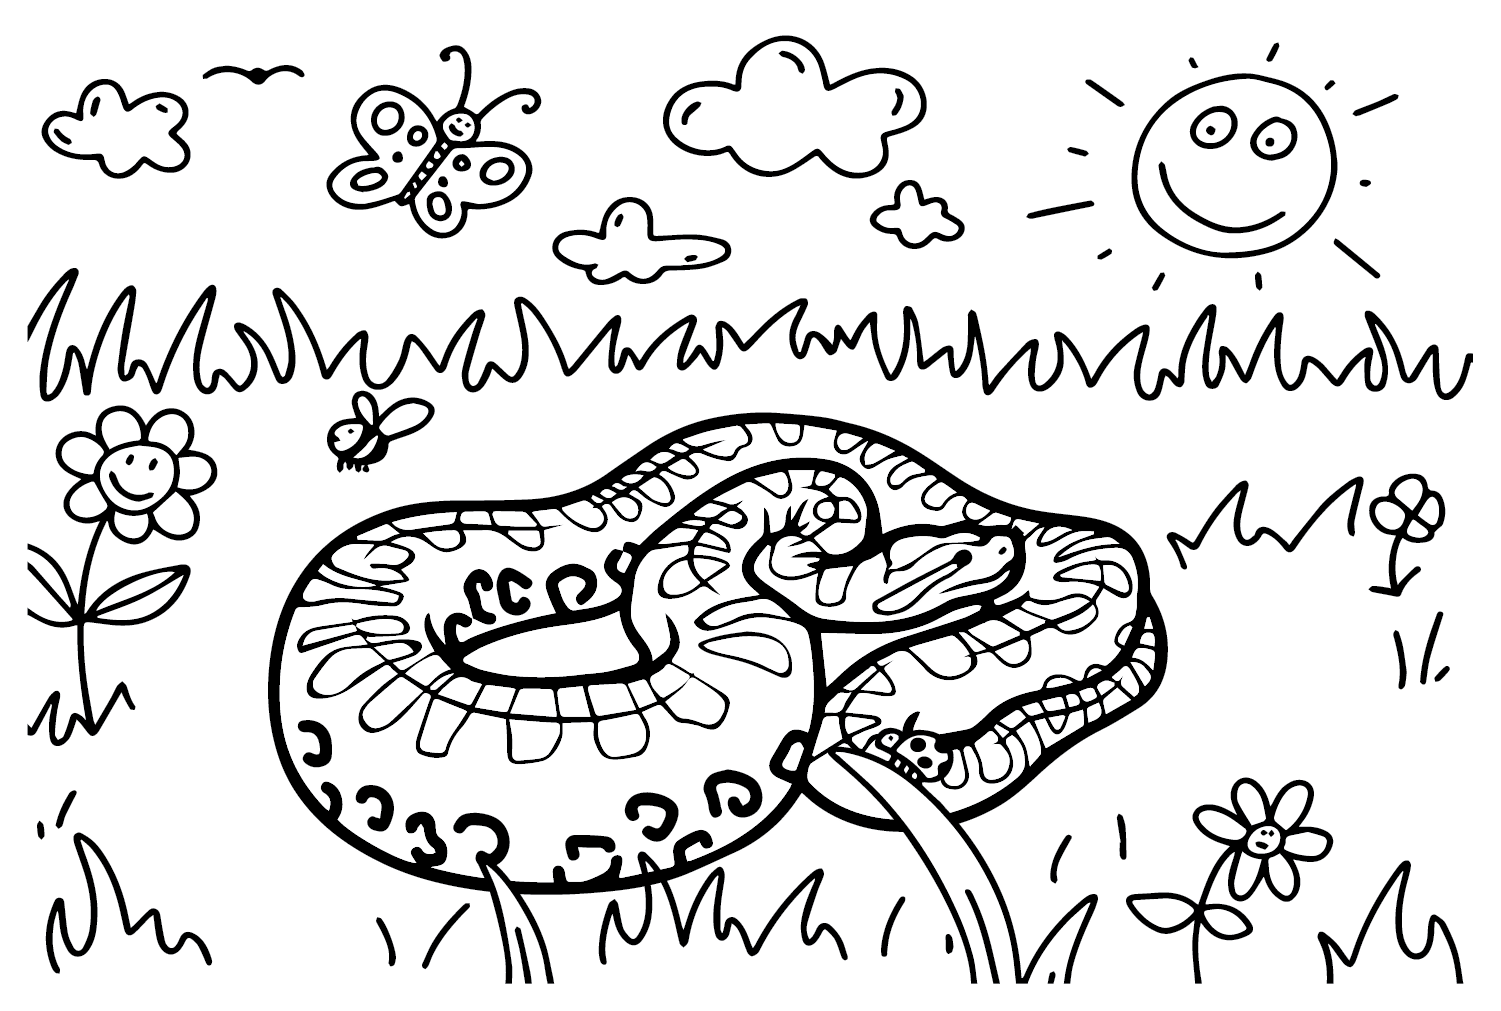 Coloring Page Anaconda from Anaconda